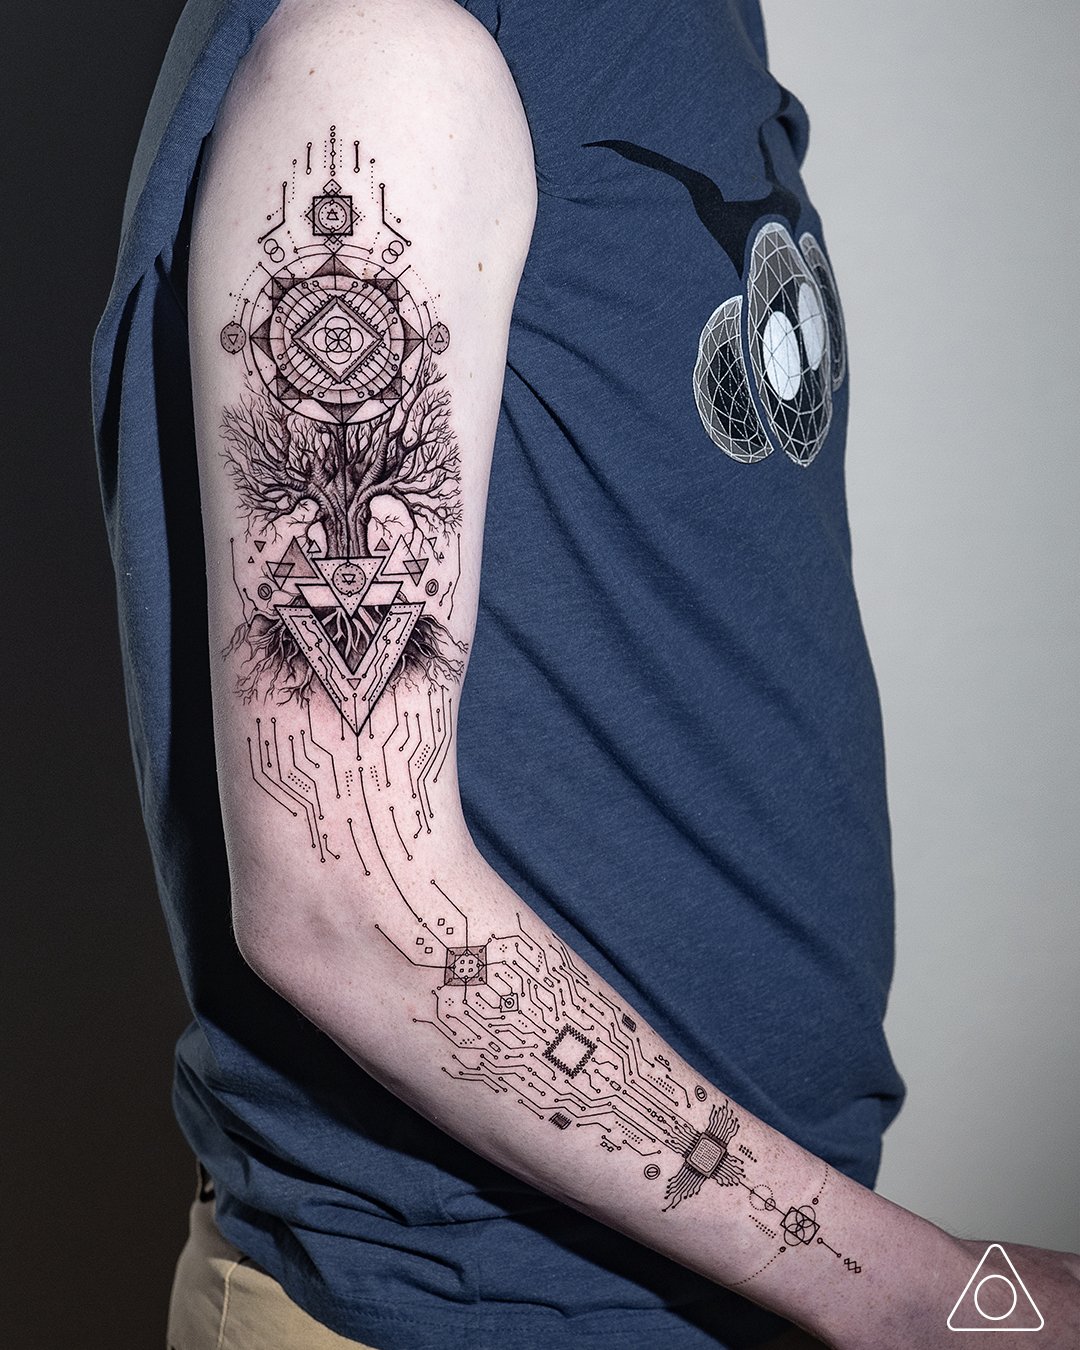 Transcendence Tattoo Art: A Tech-Inspired Fusion by Los Angeles Tattoo Artist — 1MM Tattoo Studio